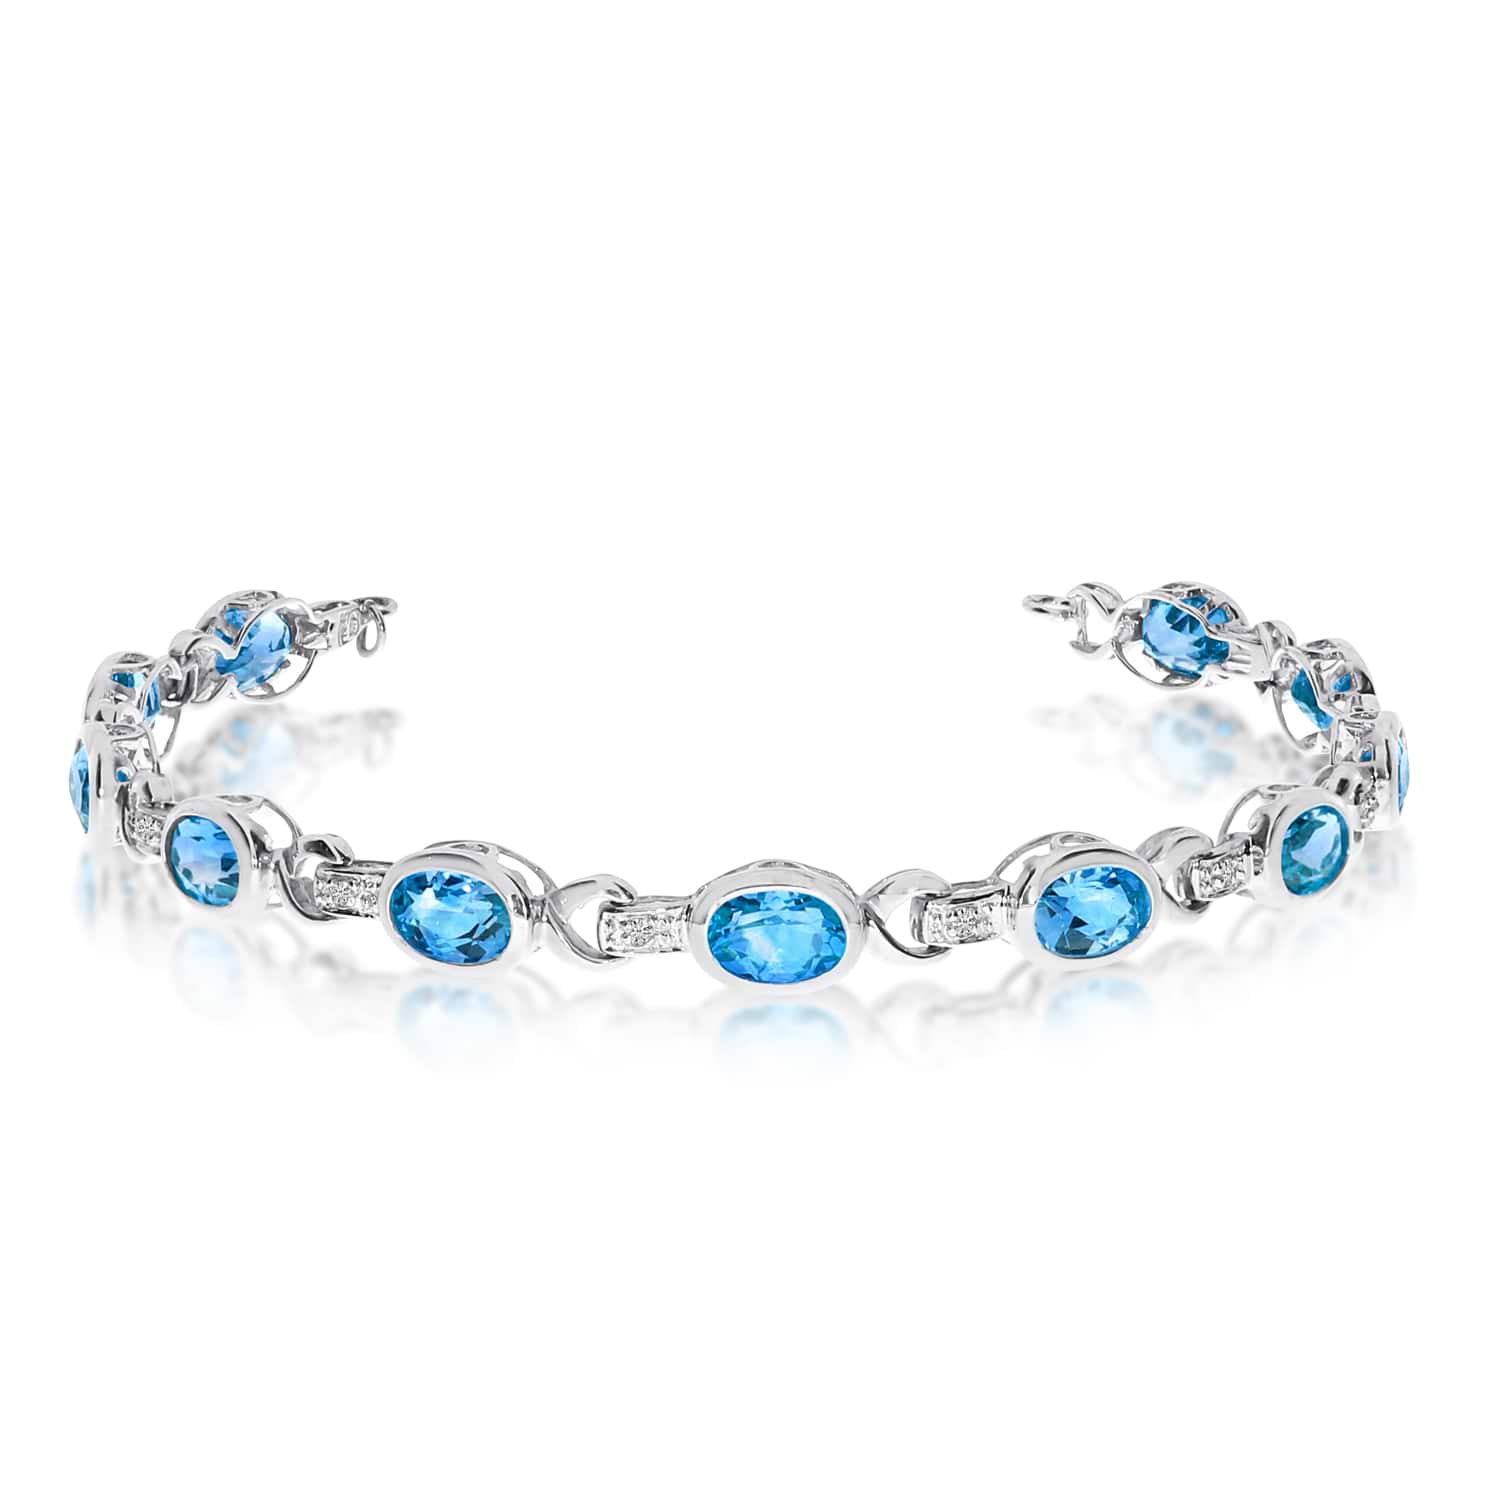 Oval Blue Topaz & Diamond Link Bracelet 14k White Gold (9.62ctw)